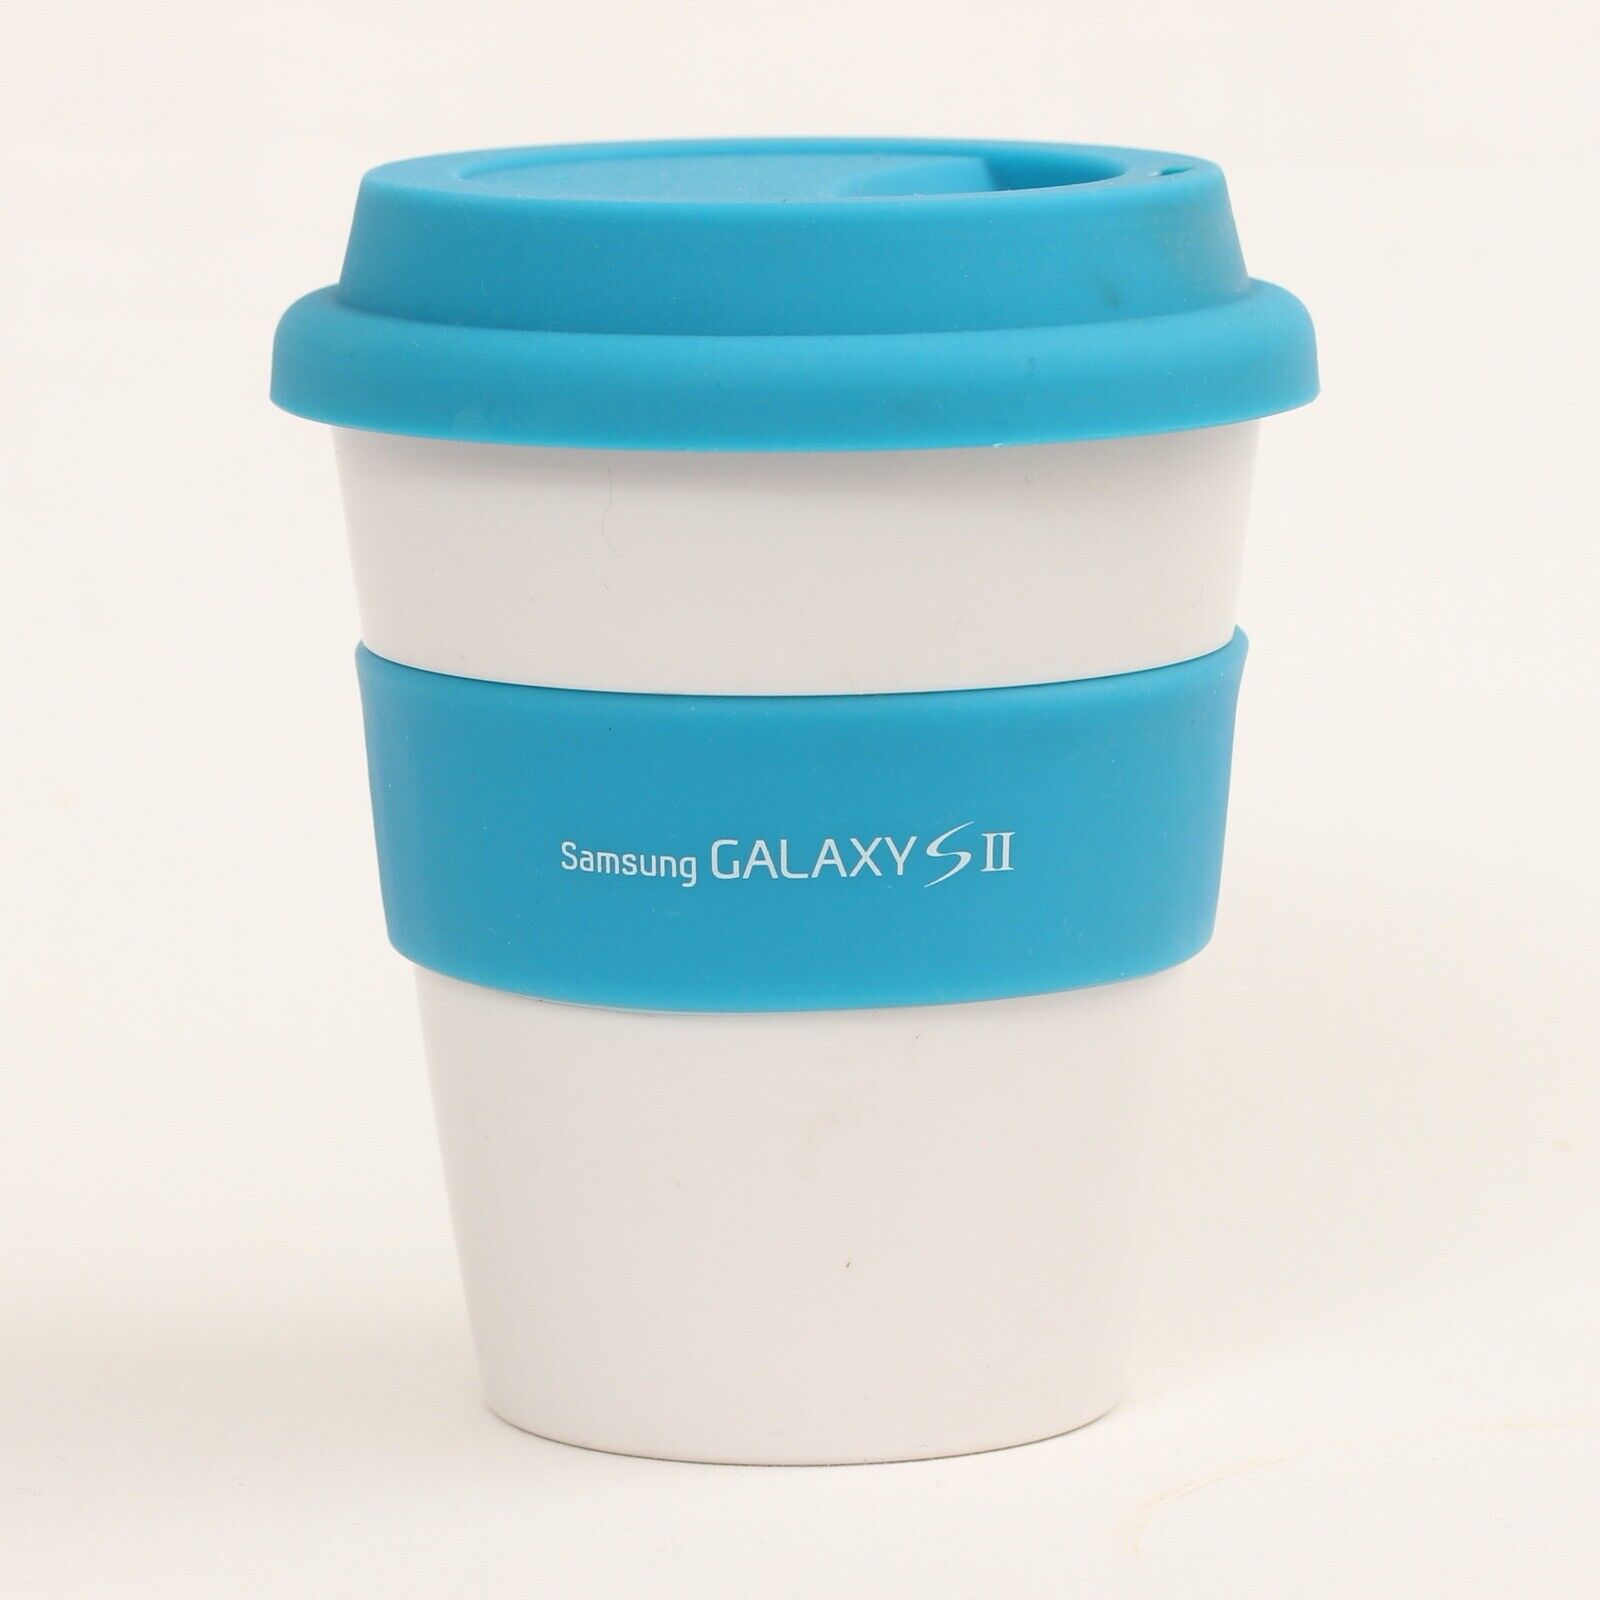 Samsung Galaxy S II (Galaxy S 2) Promotional Smartphone Travel Coffee Mug Cup 